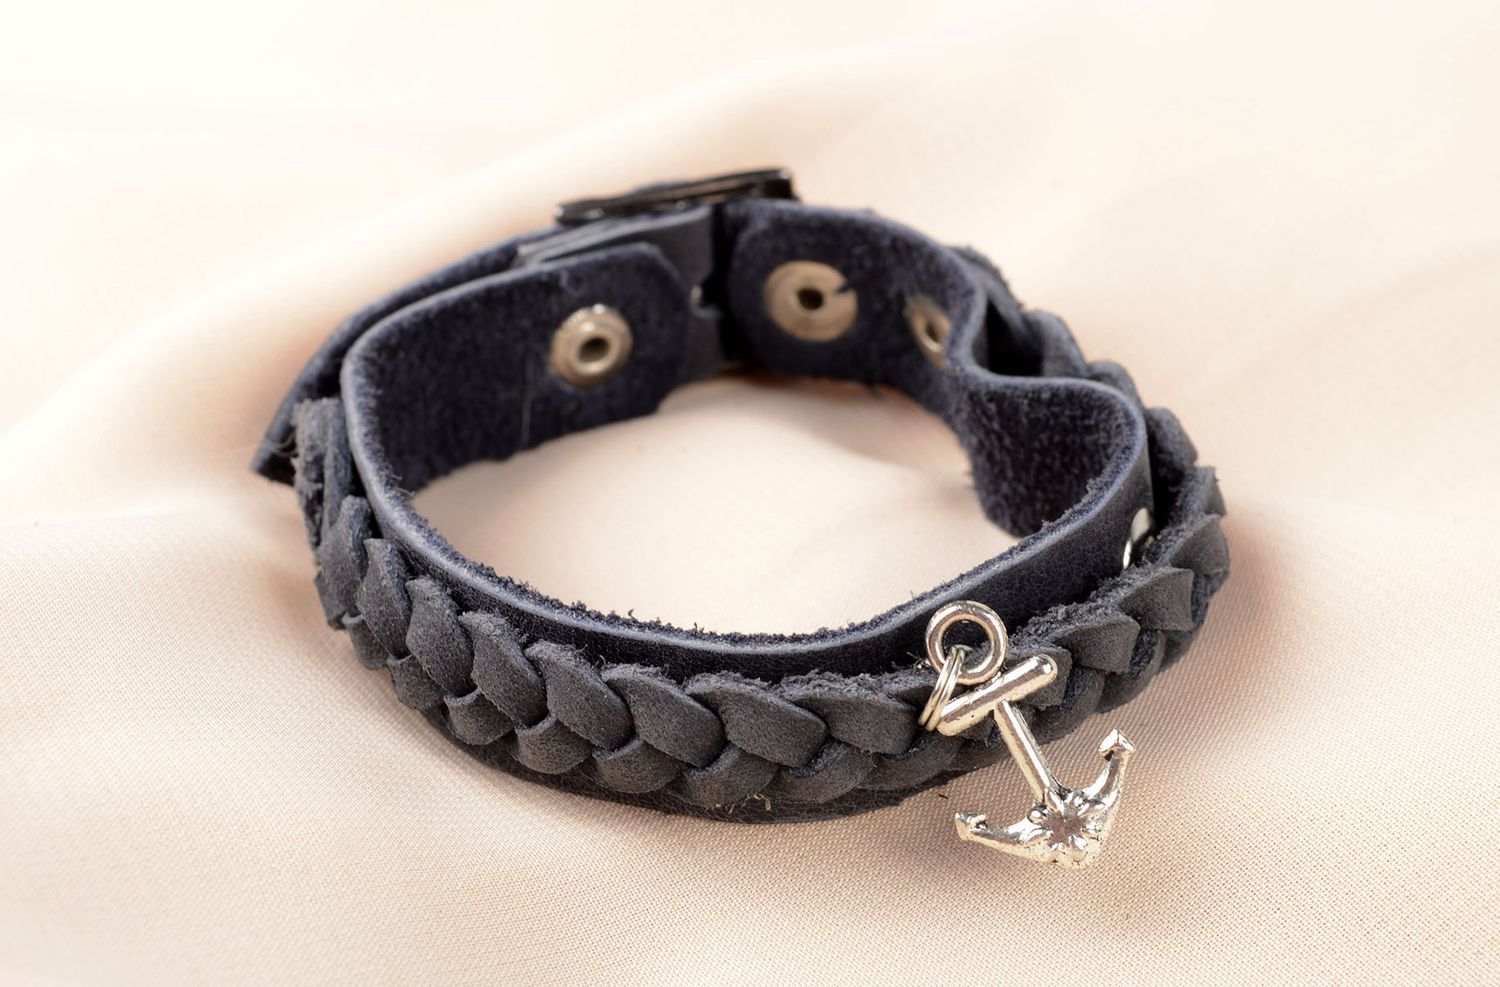 Stylish handmade leather bracelet fashion trends leather goods small gifts photo 5